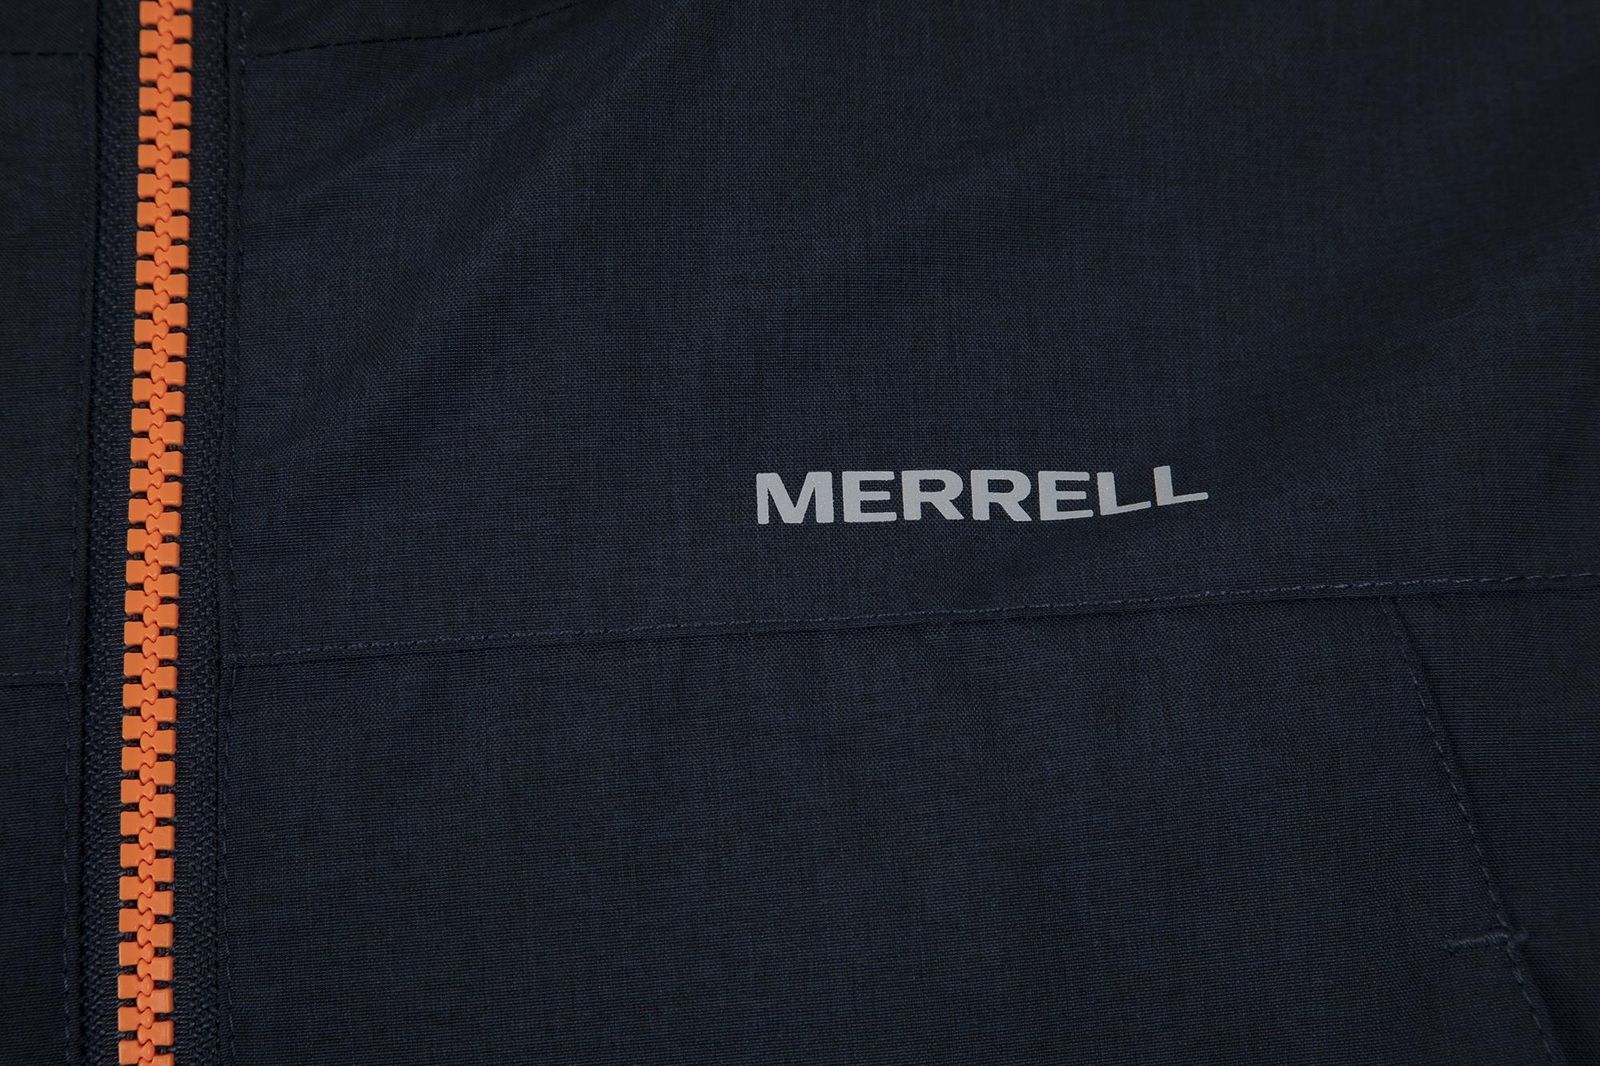   Merrell Men's Windbreaker, : -. S19AMRJAM04-Z4.  52